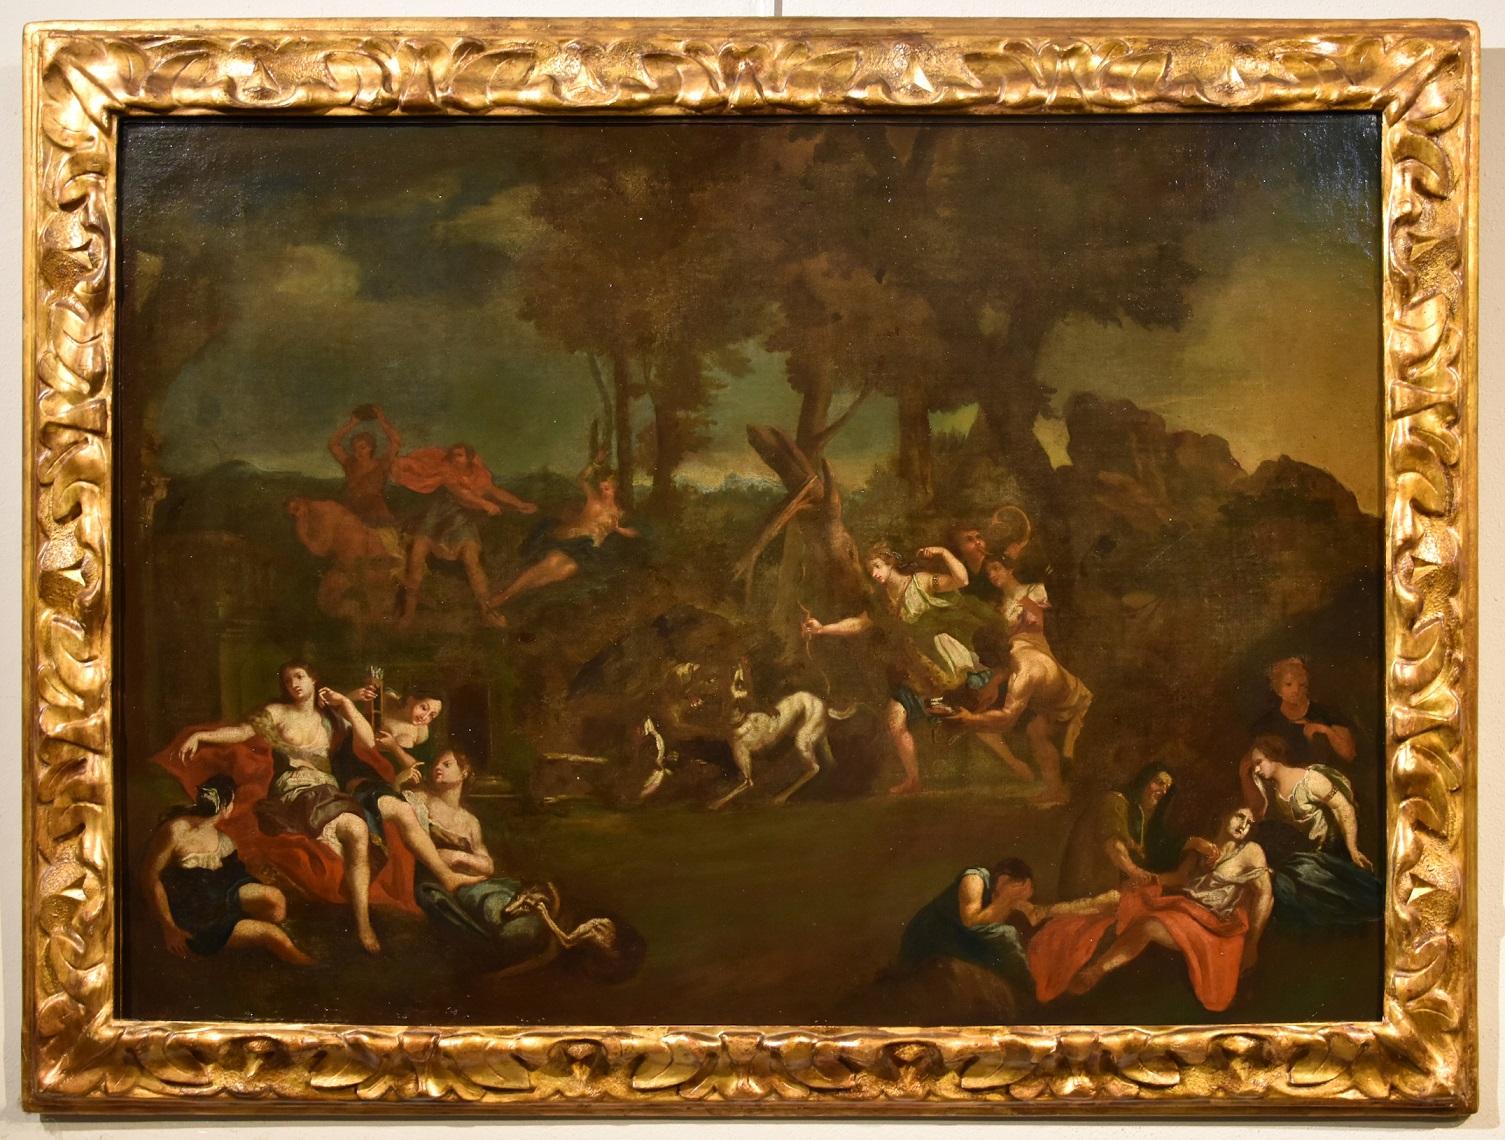 Diana Boullogne Mythologische Gemälde Öl auf Leinwand Alter Meister 17/18. Jahrhundert  